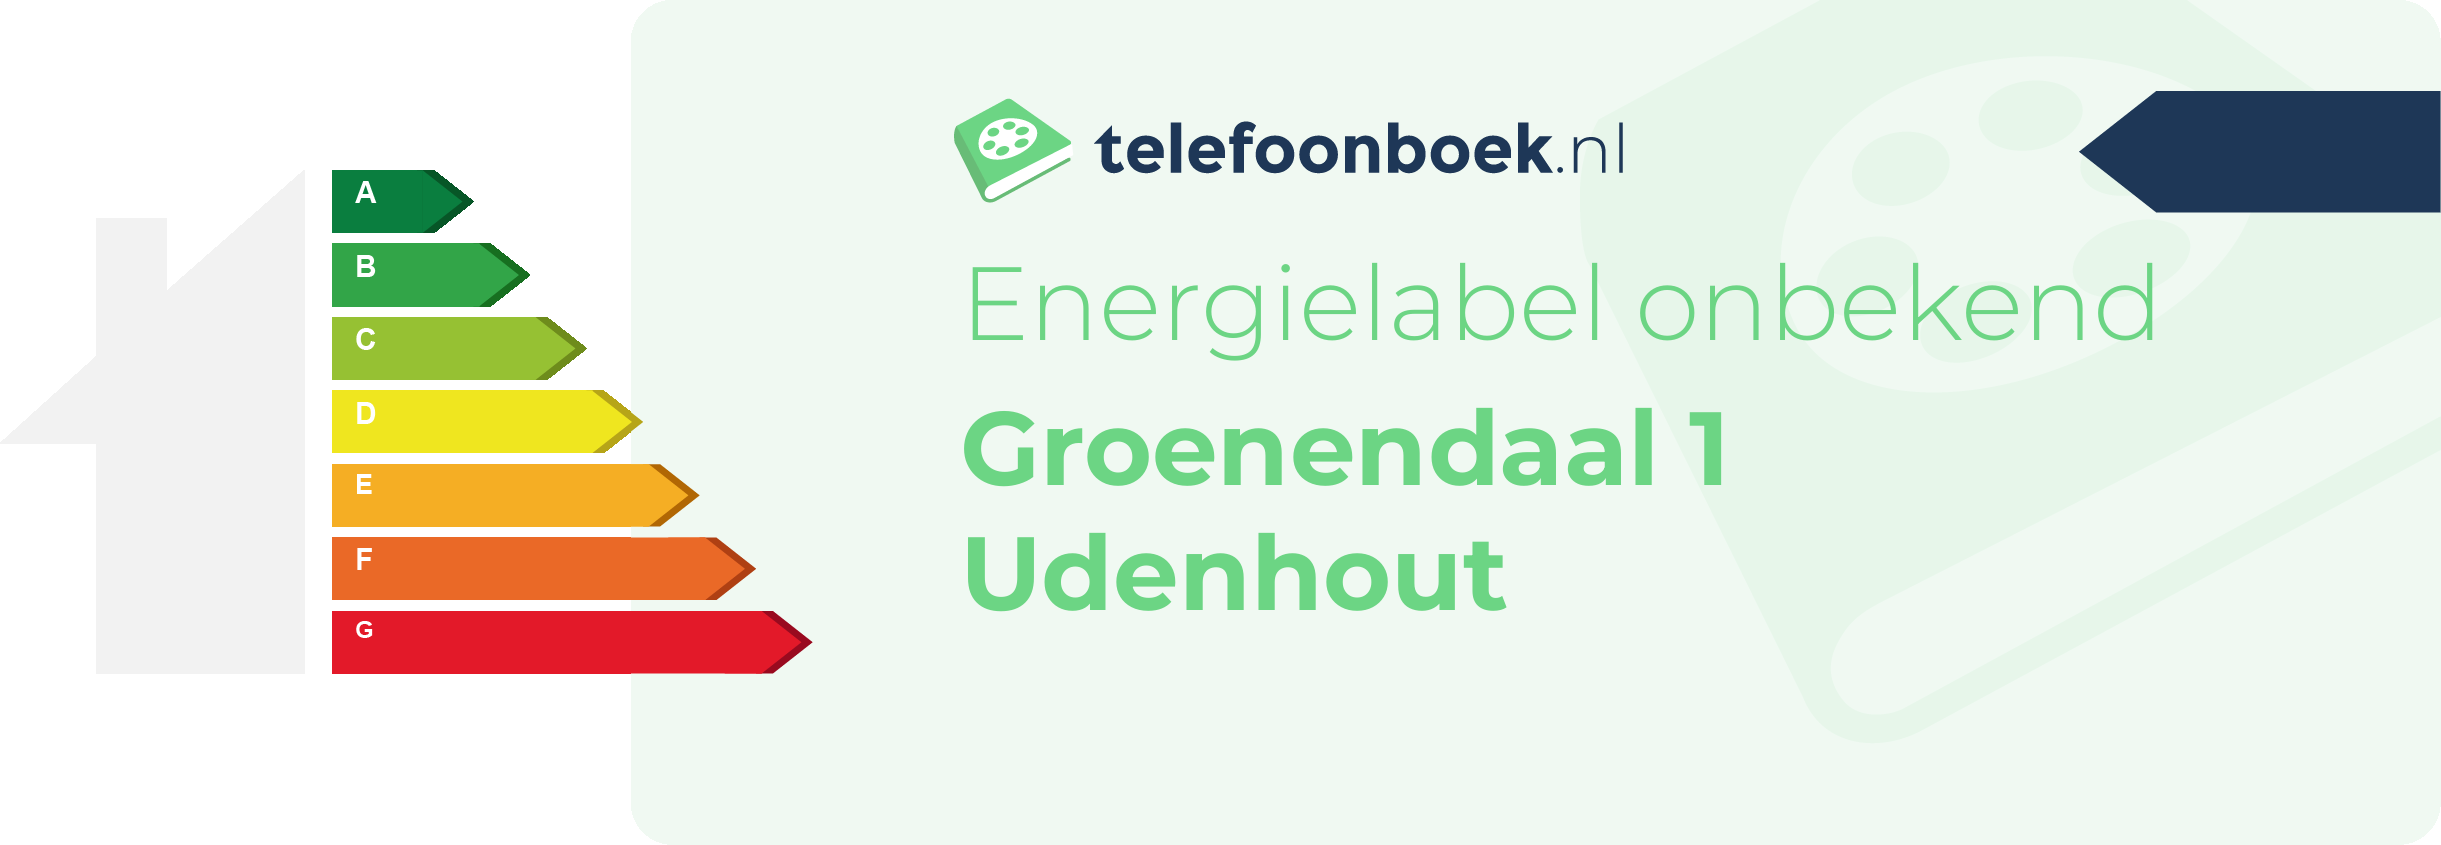 Energielabel Groenendaal 1 Udenhout